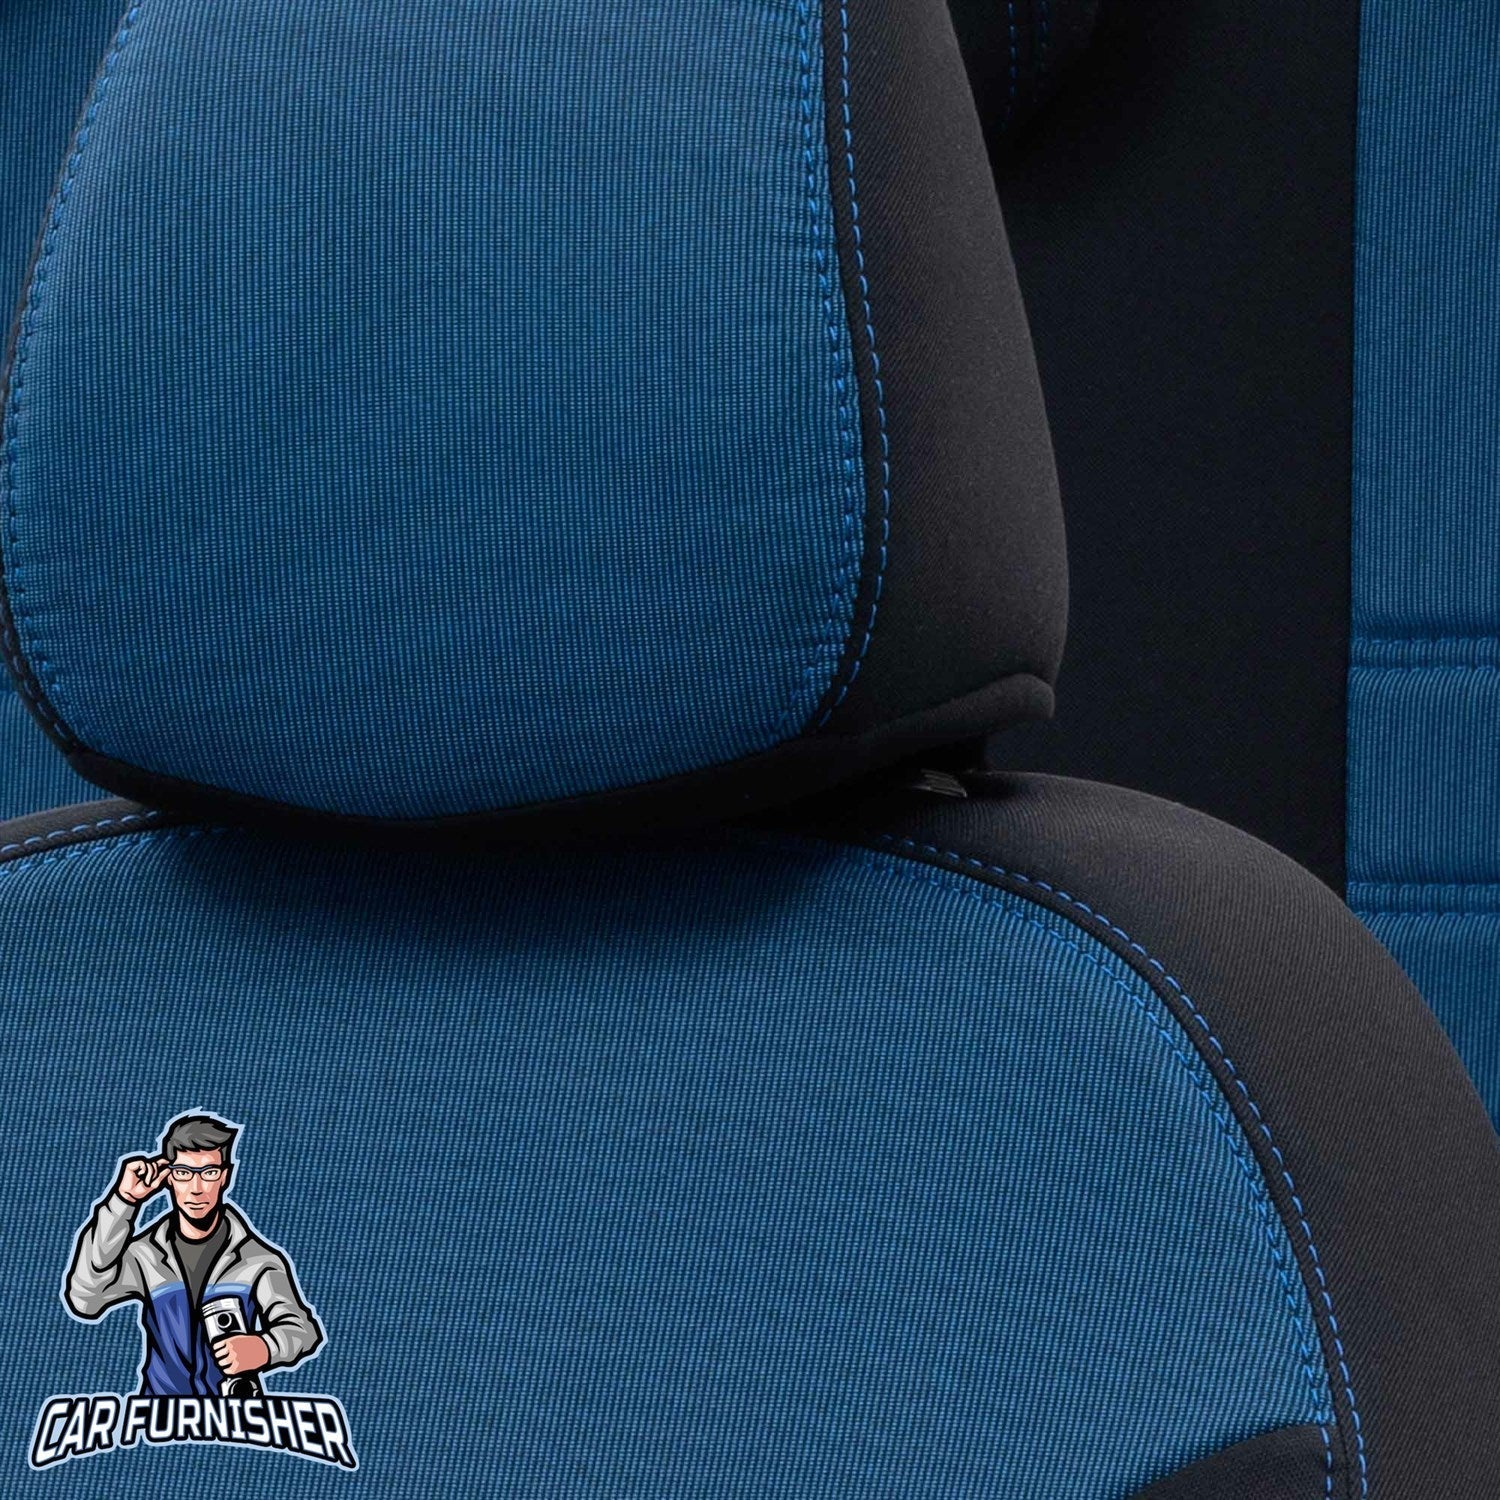 Peugeot Boxer Seat Covers Original Jacquard Design Blue Jacquard Fabric